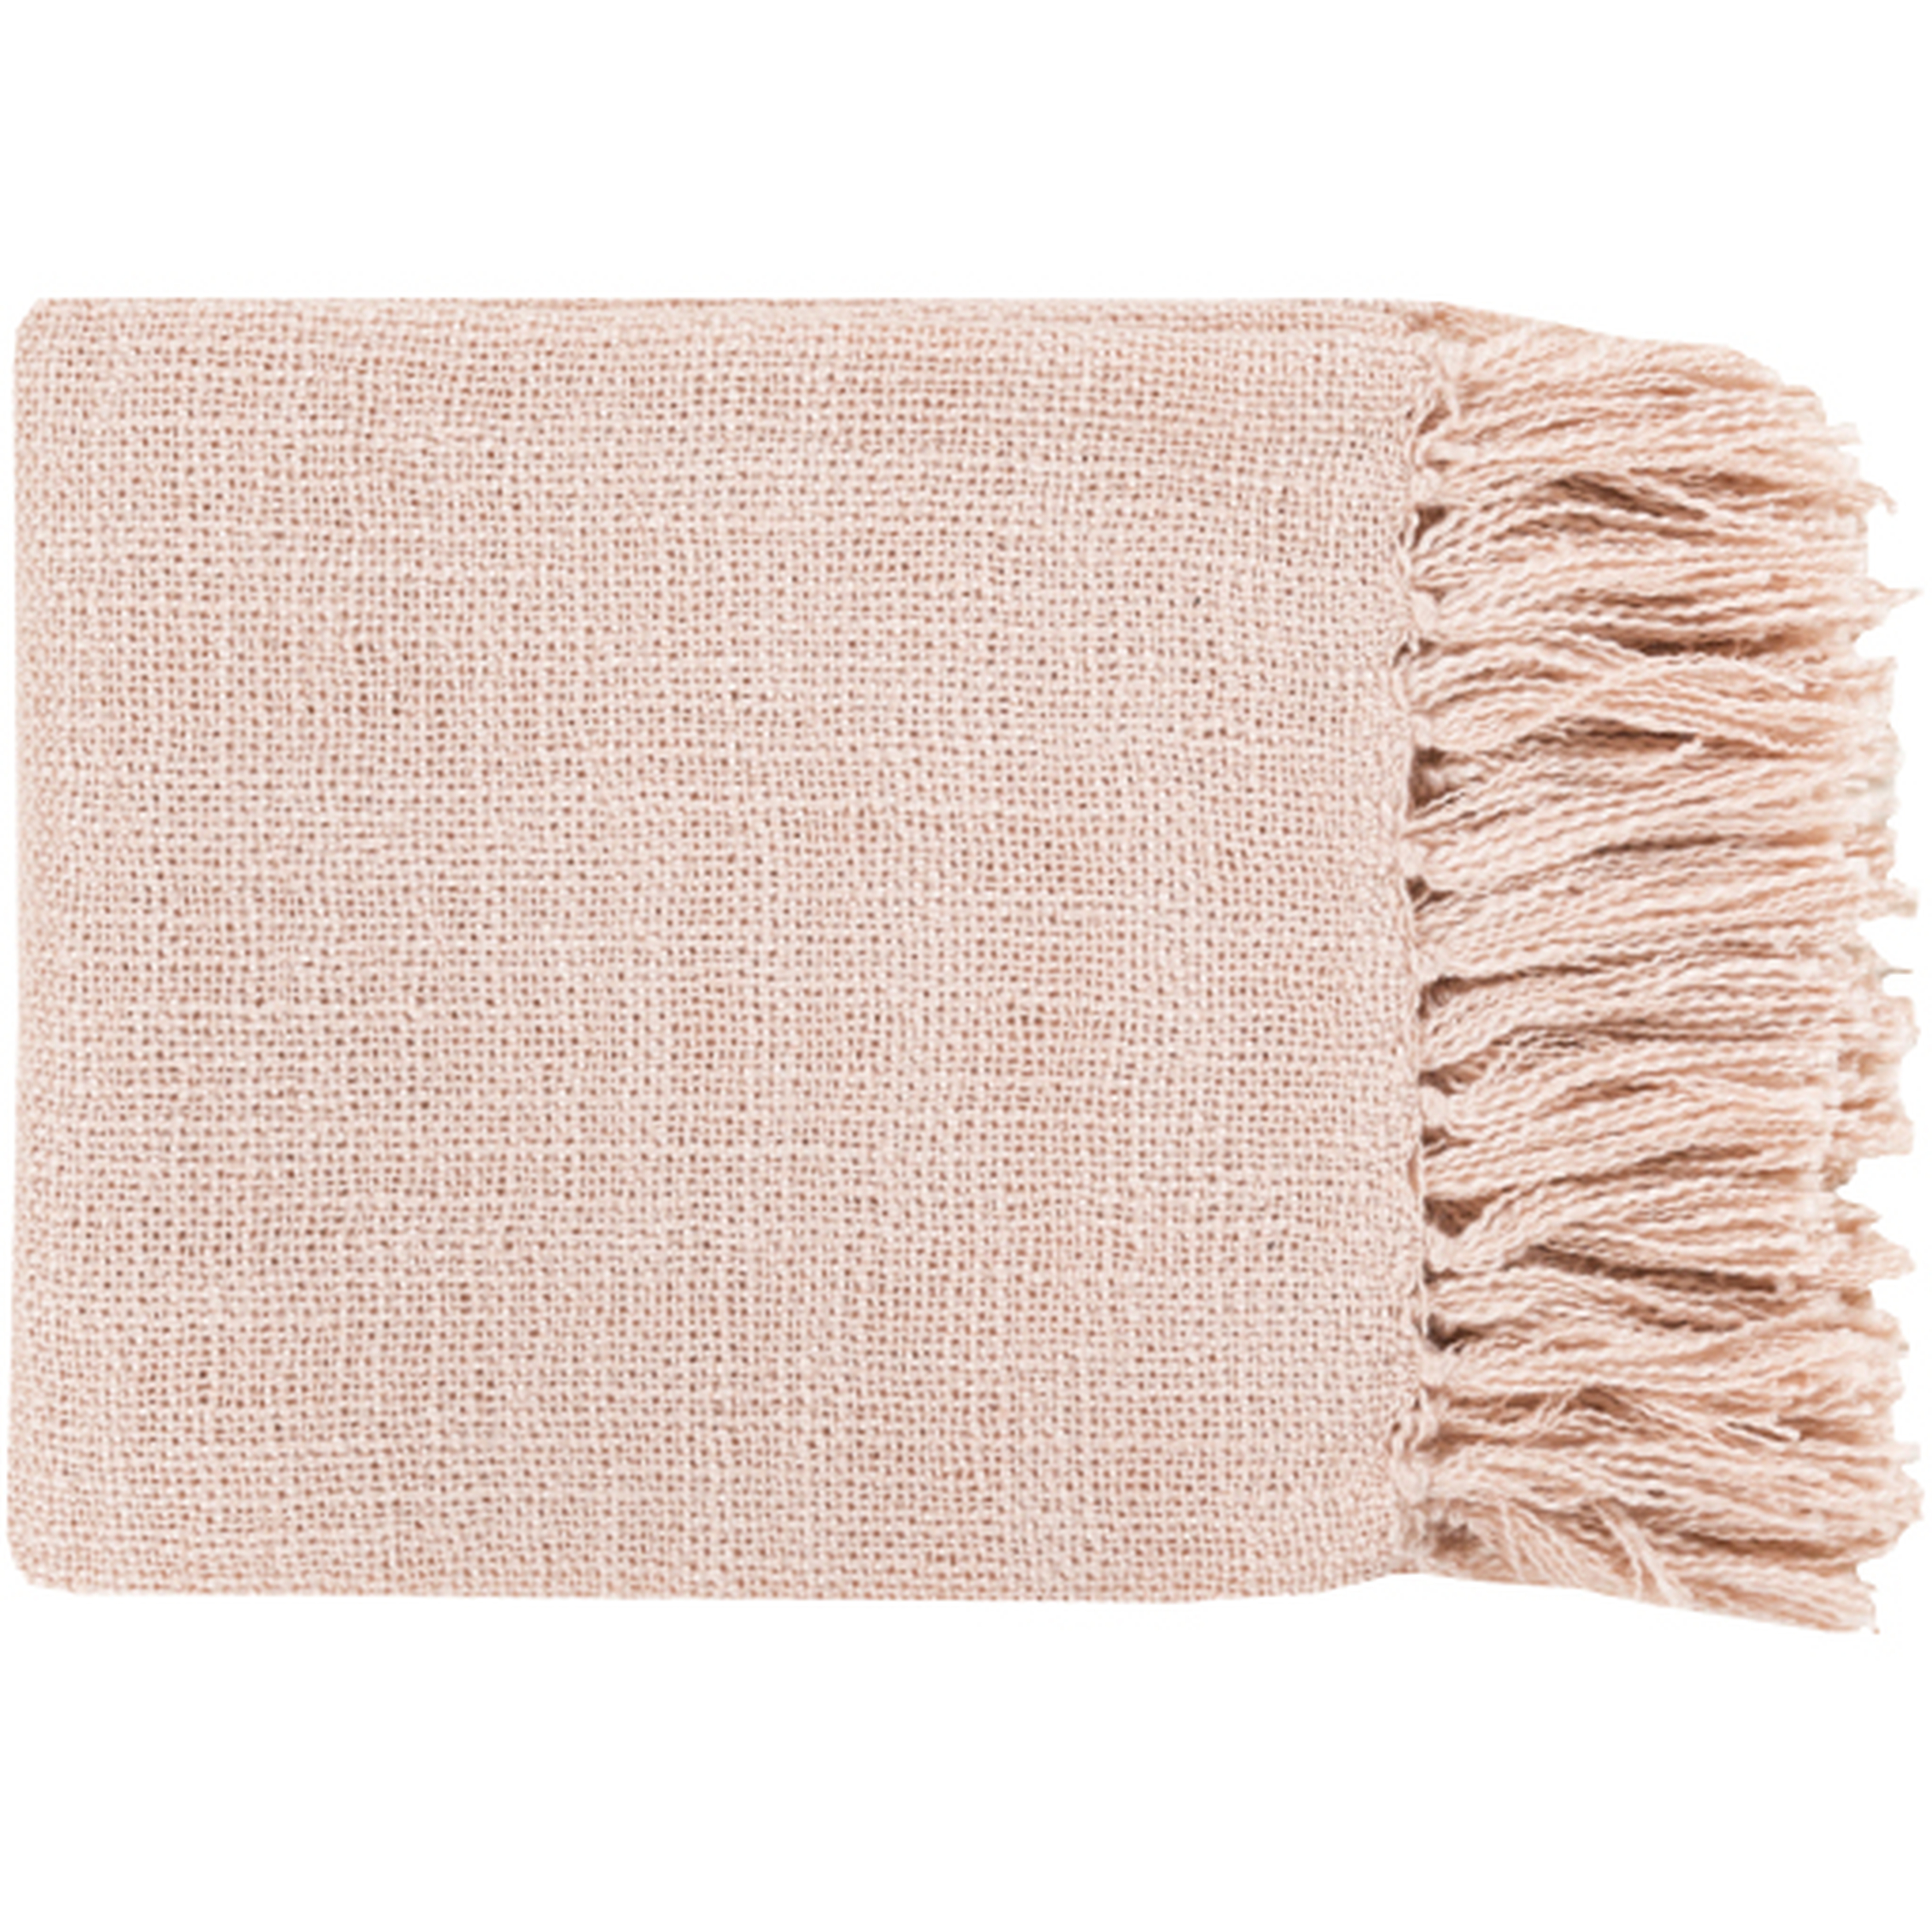 Tilda Throw Blanket, Pale Pink - Surya